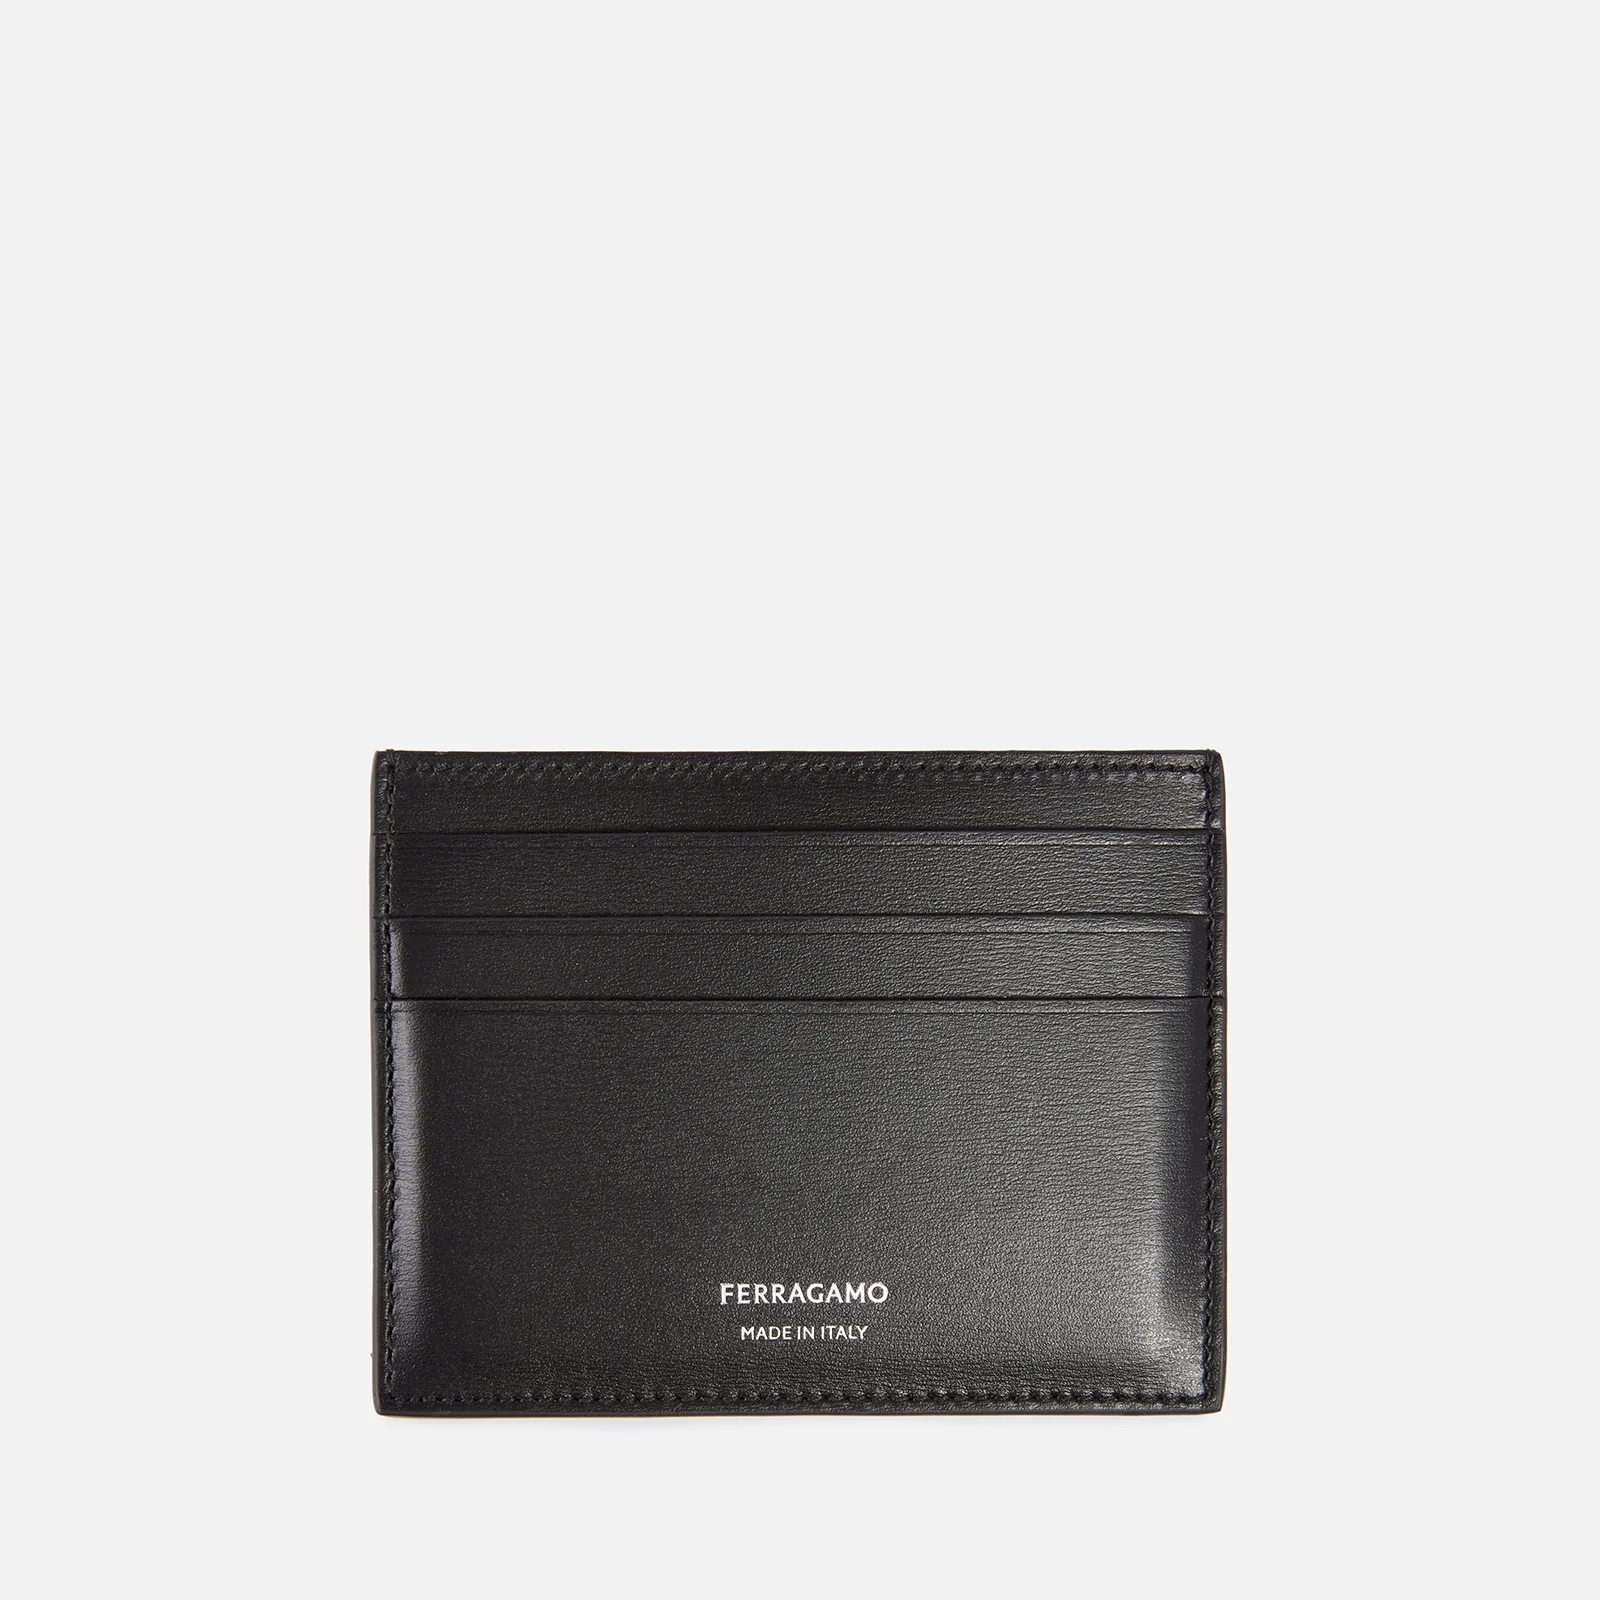 Ferragamo Classic Leather Cardholder Image 1